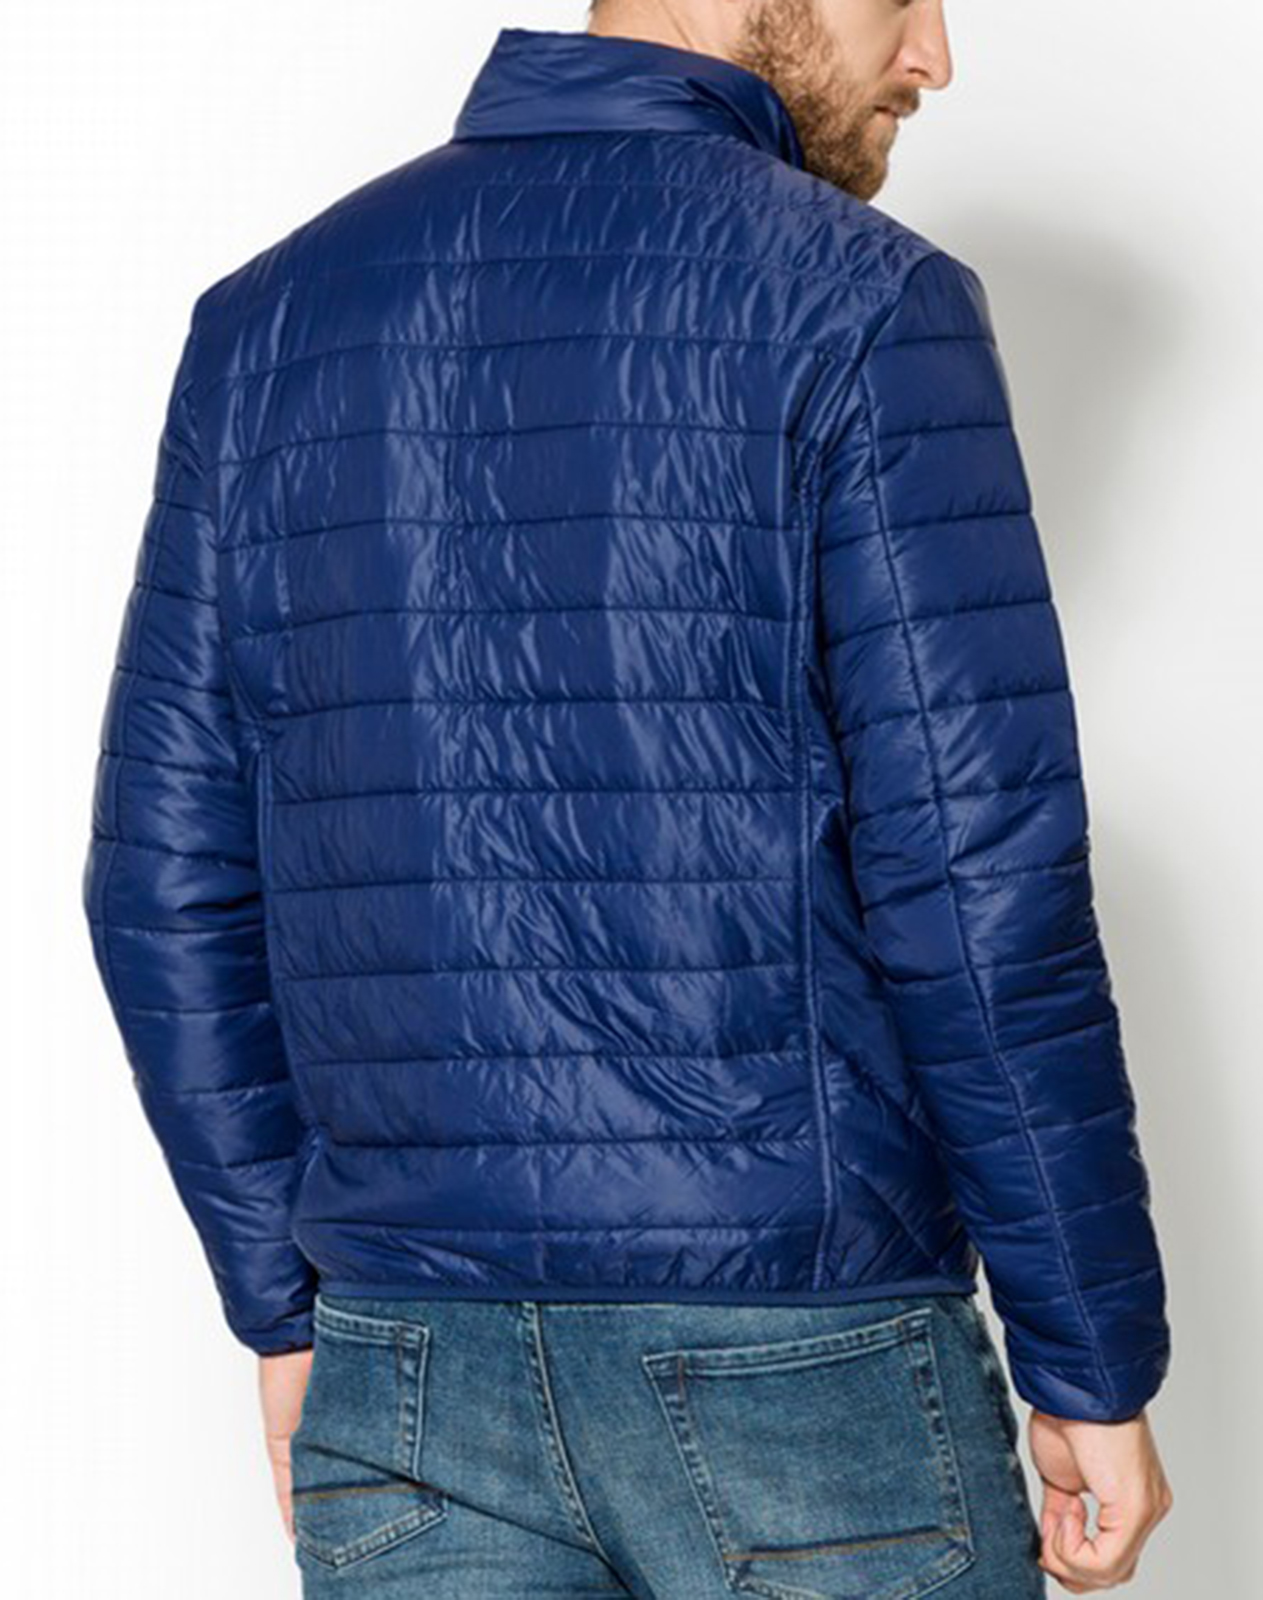 timberland milford jacket